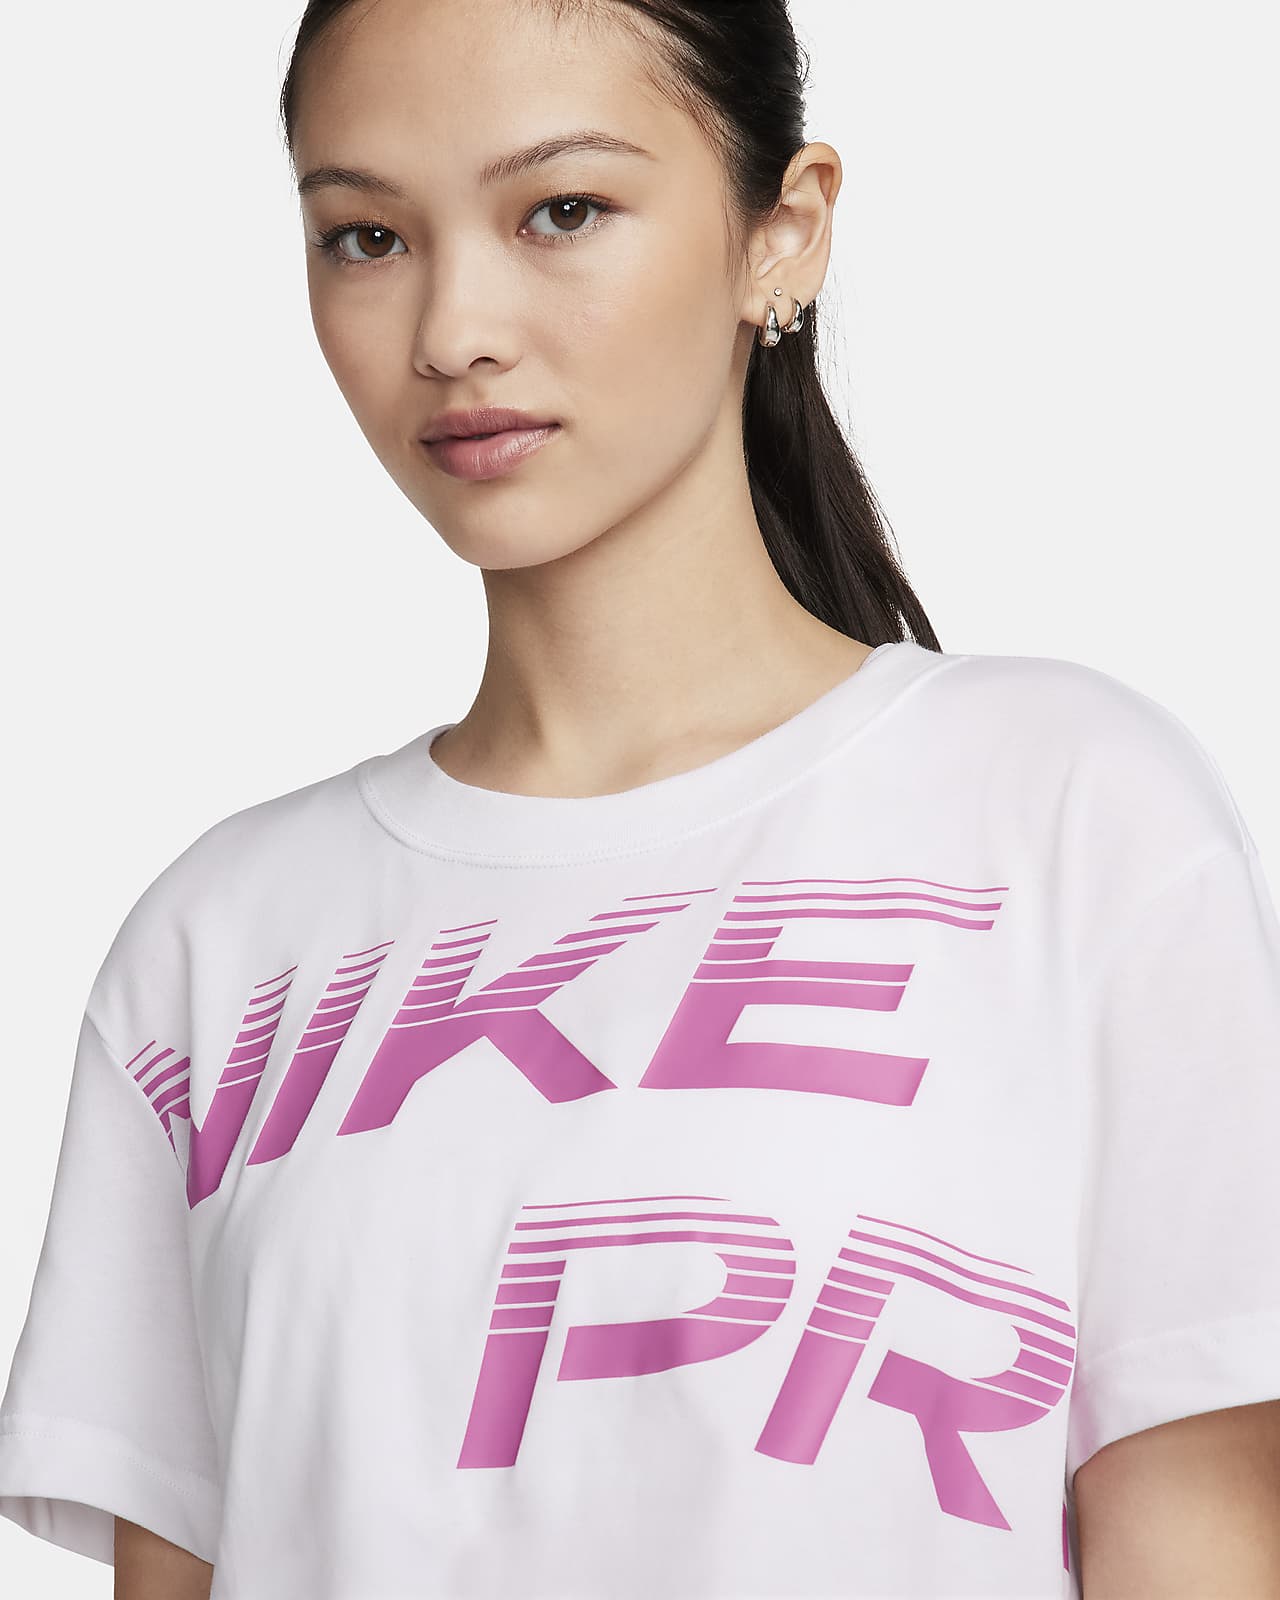 Womens Nike Pro. Nike JP